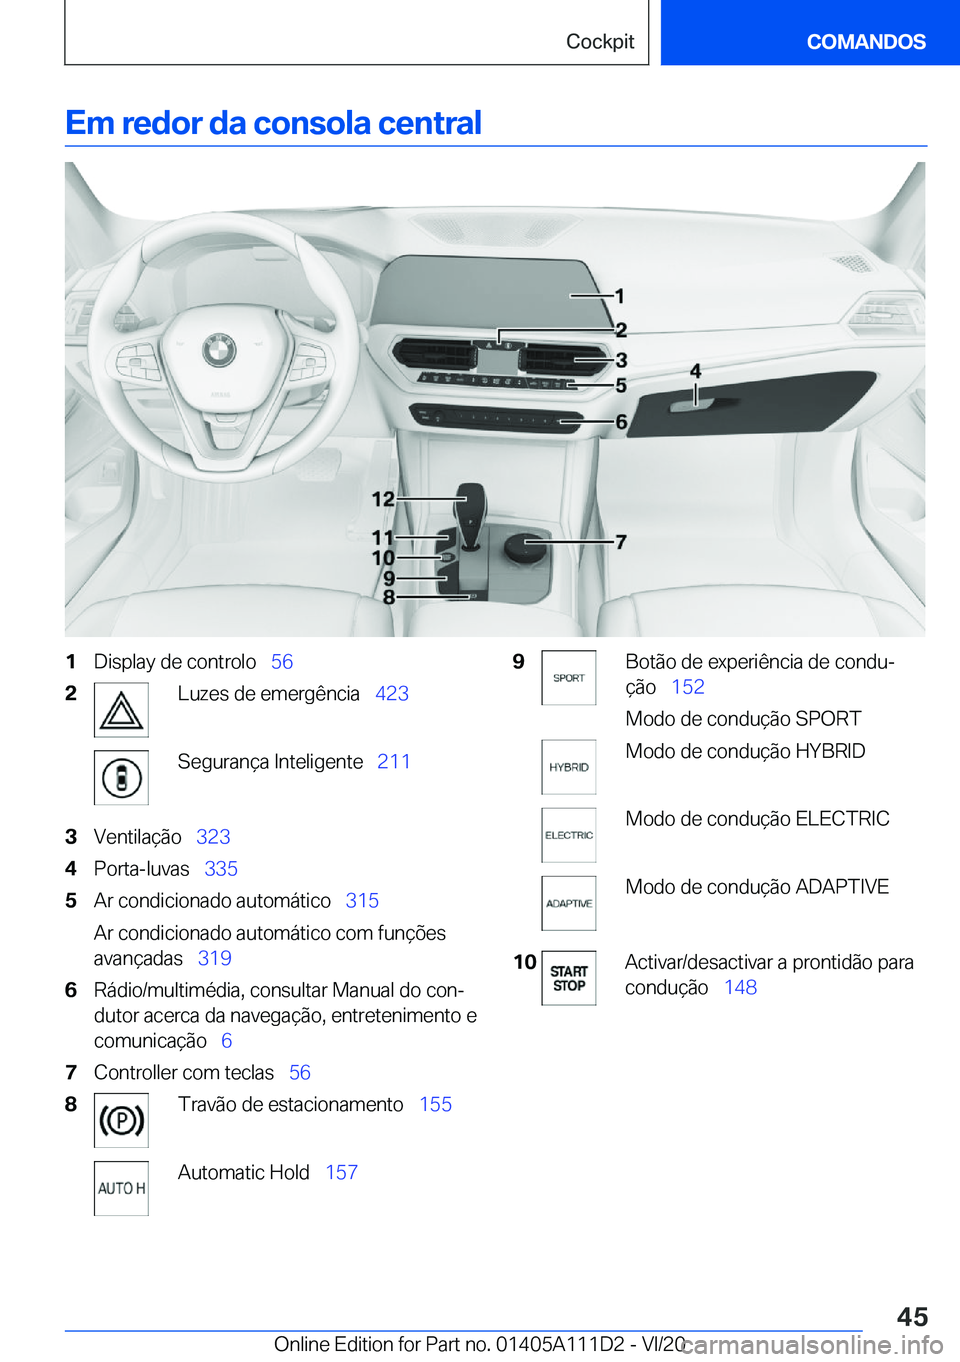 BMW 3 SERIES SEDAN PLUG-IN HYBRID 2021  Manual do condutor (in Portuguese) �E�m��r�e�d�o�r��d�a��c�o�n�s�o�l�a��c�e�n�t�r�a�l�1�D�i�s�p�l�a�y��d�e��c�o�n�t�r�o�l�o\_�5�6�2�L�u�z�e�s��d�e��e�m�e�r�g�ê�n�c�i�a\_ �4�2�3�S�e�g�u�r�a�n�